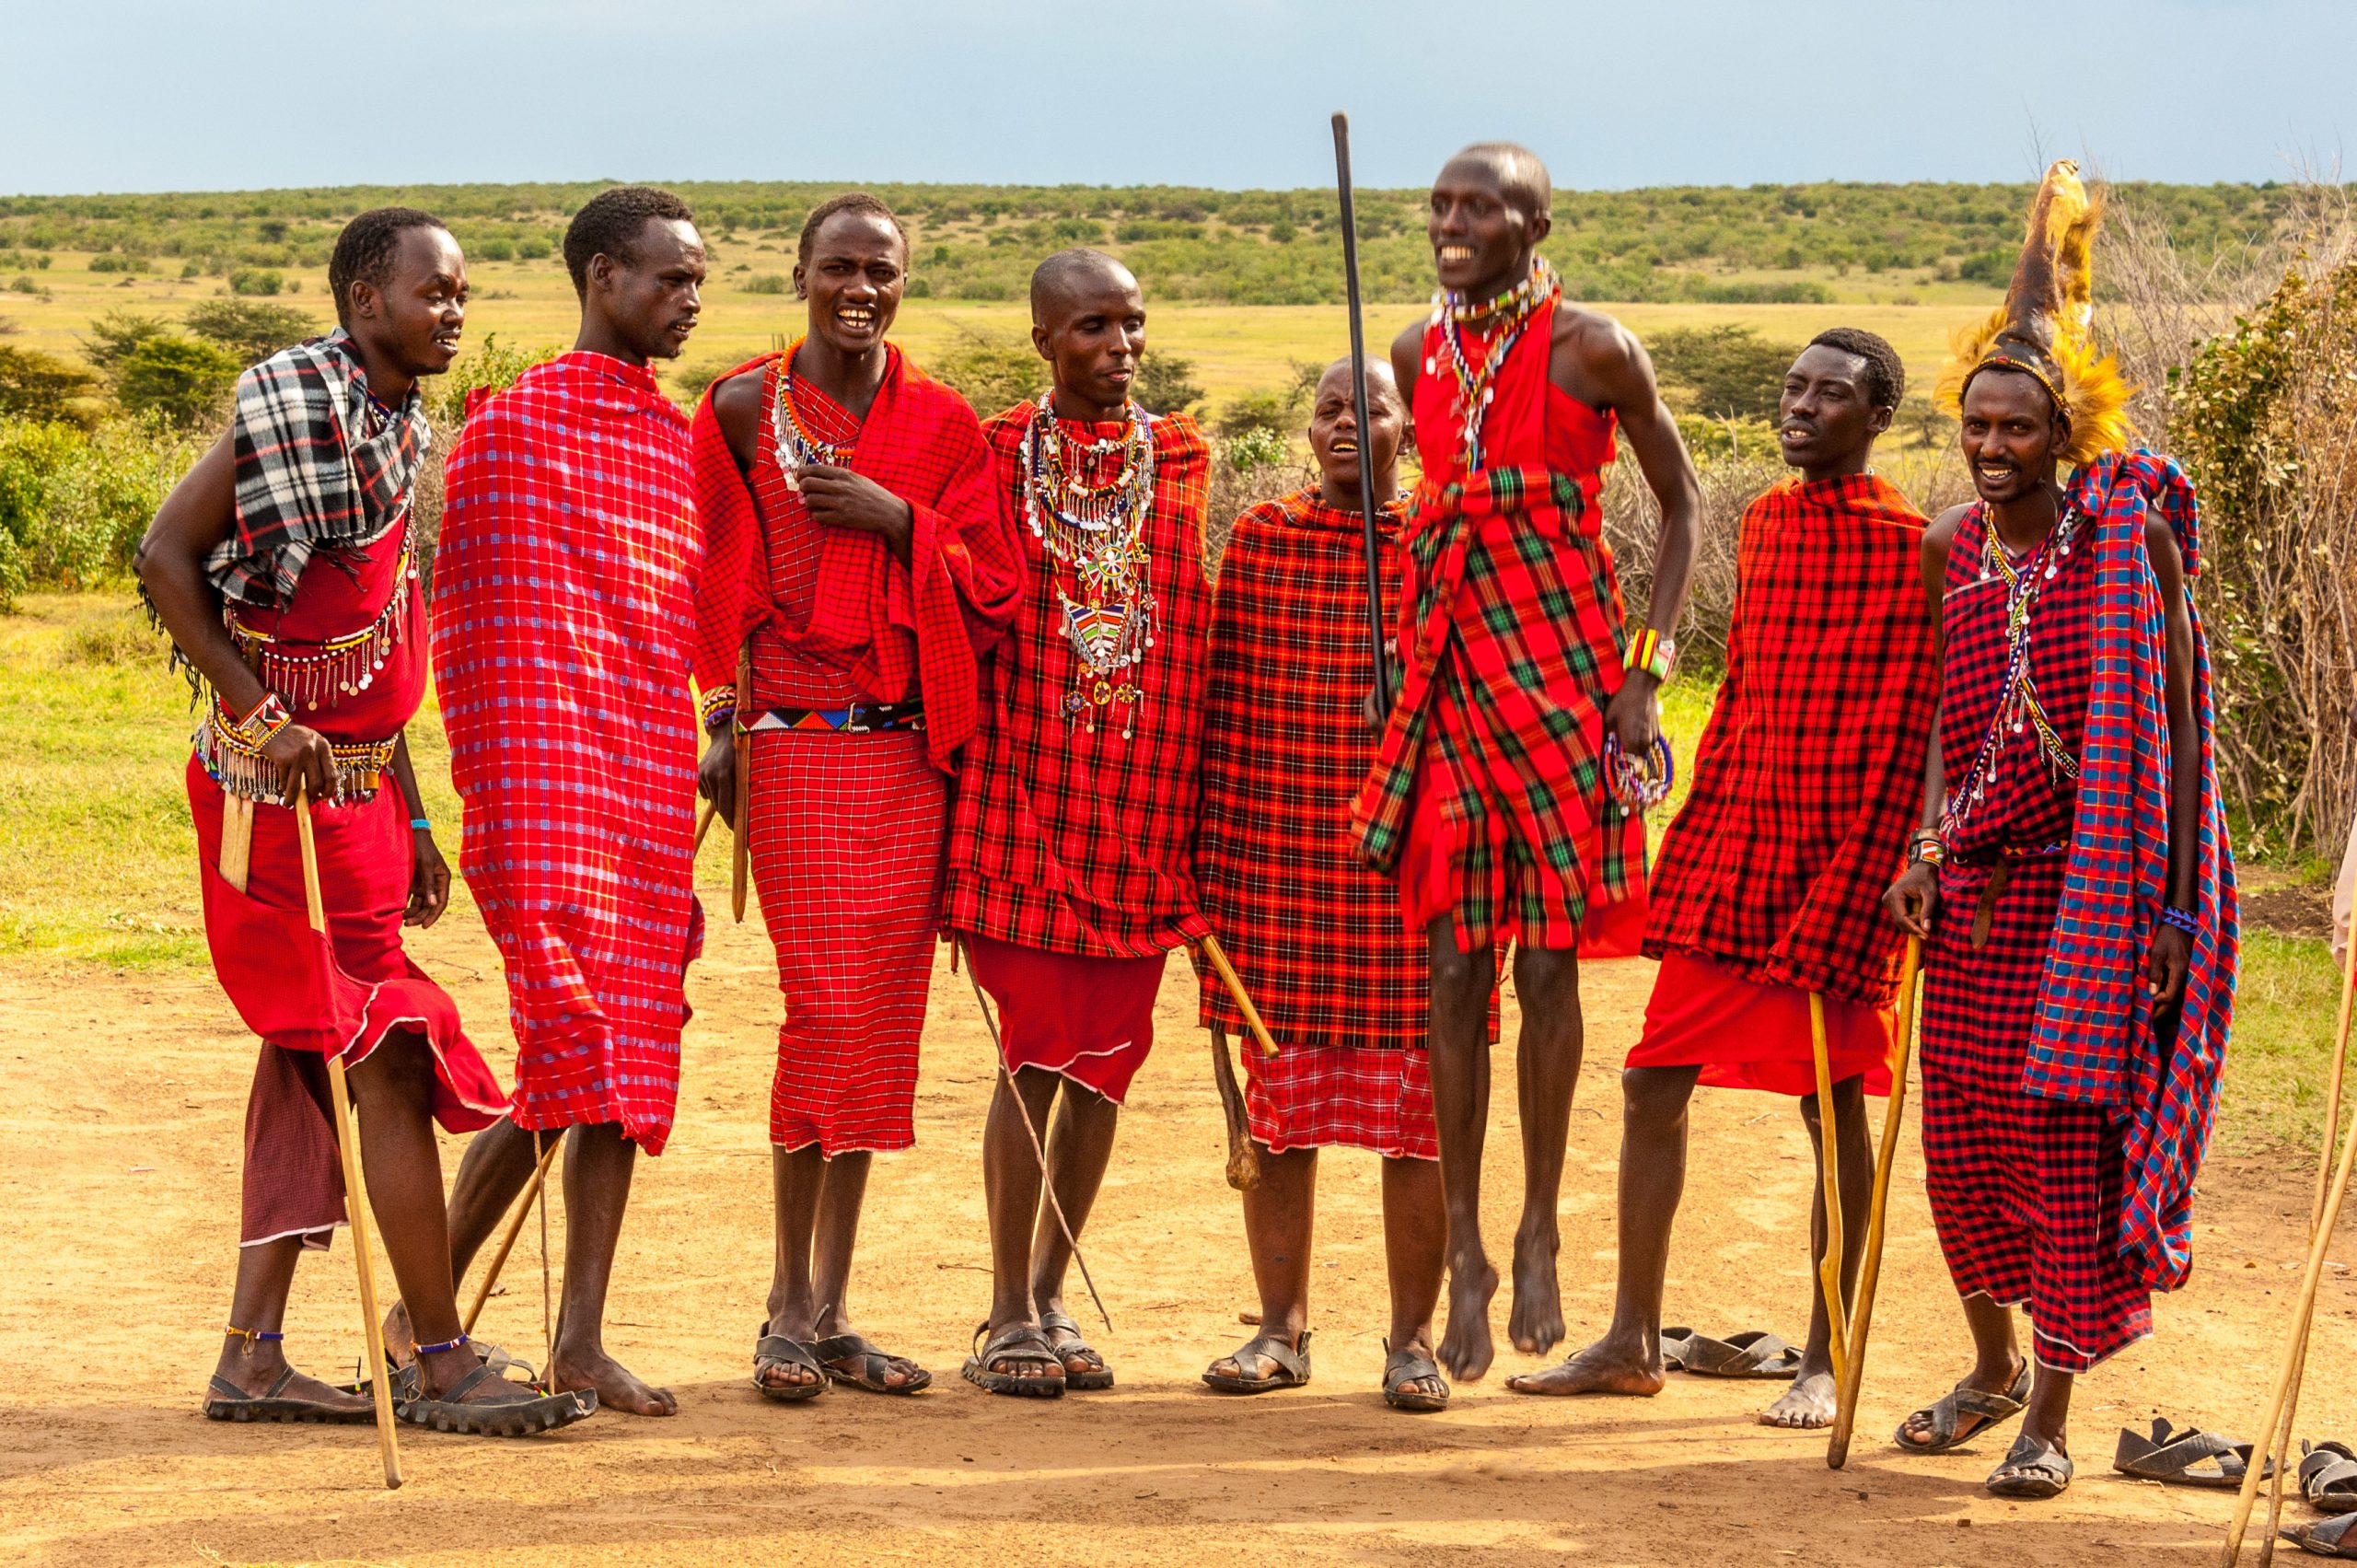 Maasai Culture and Community